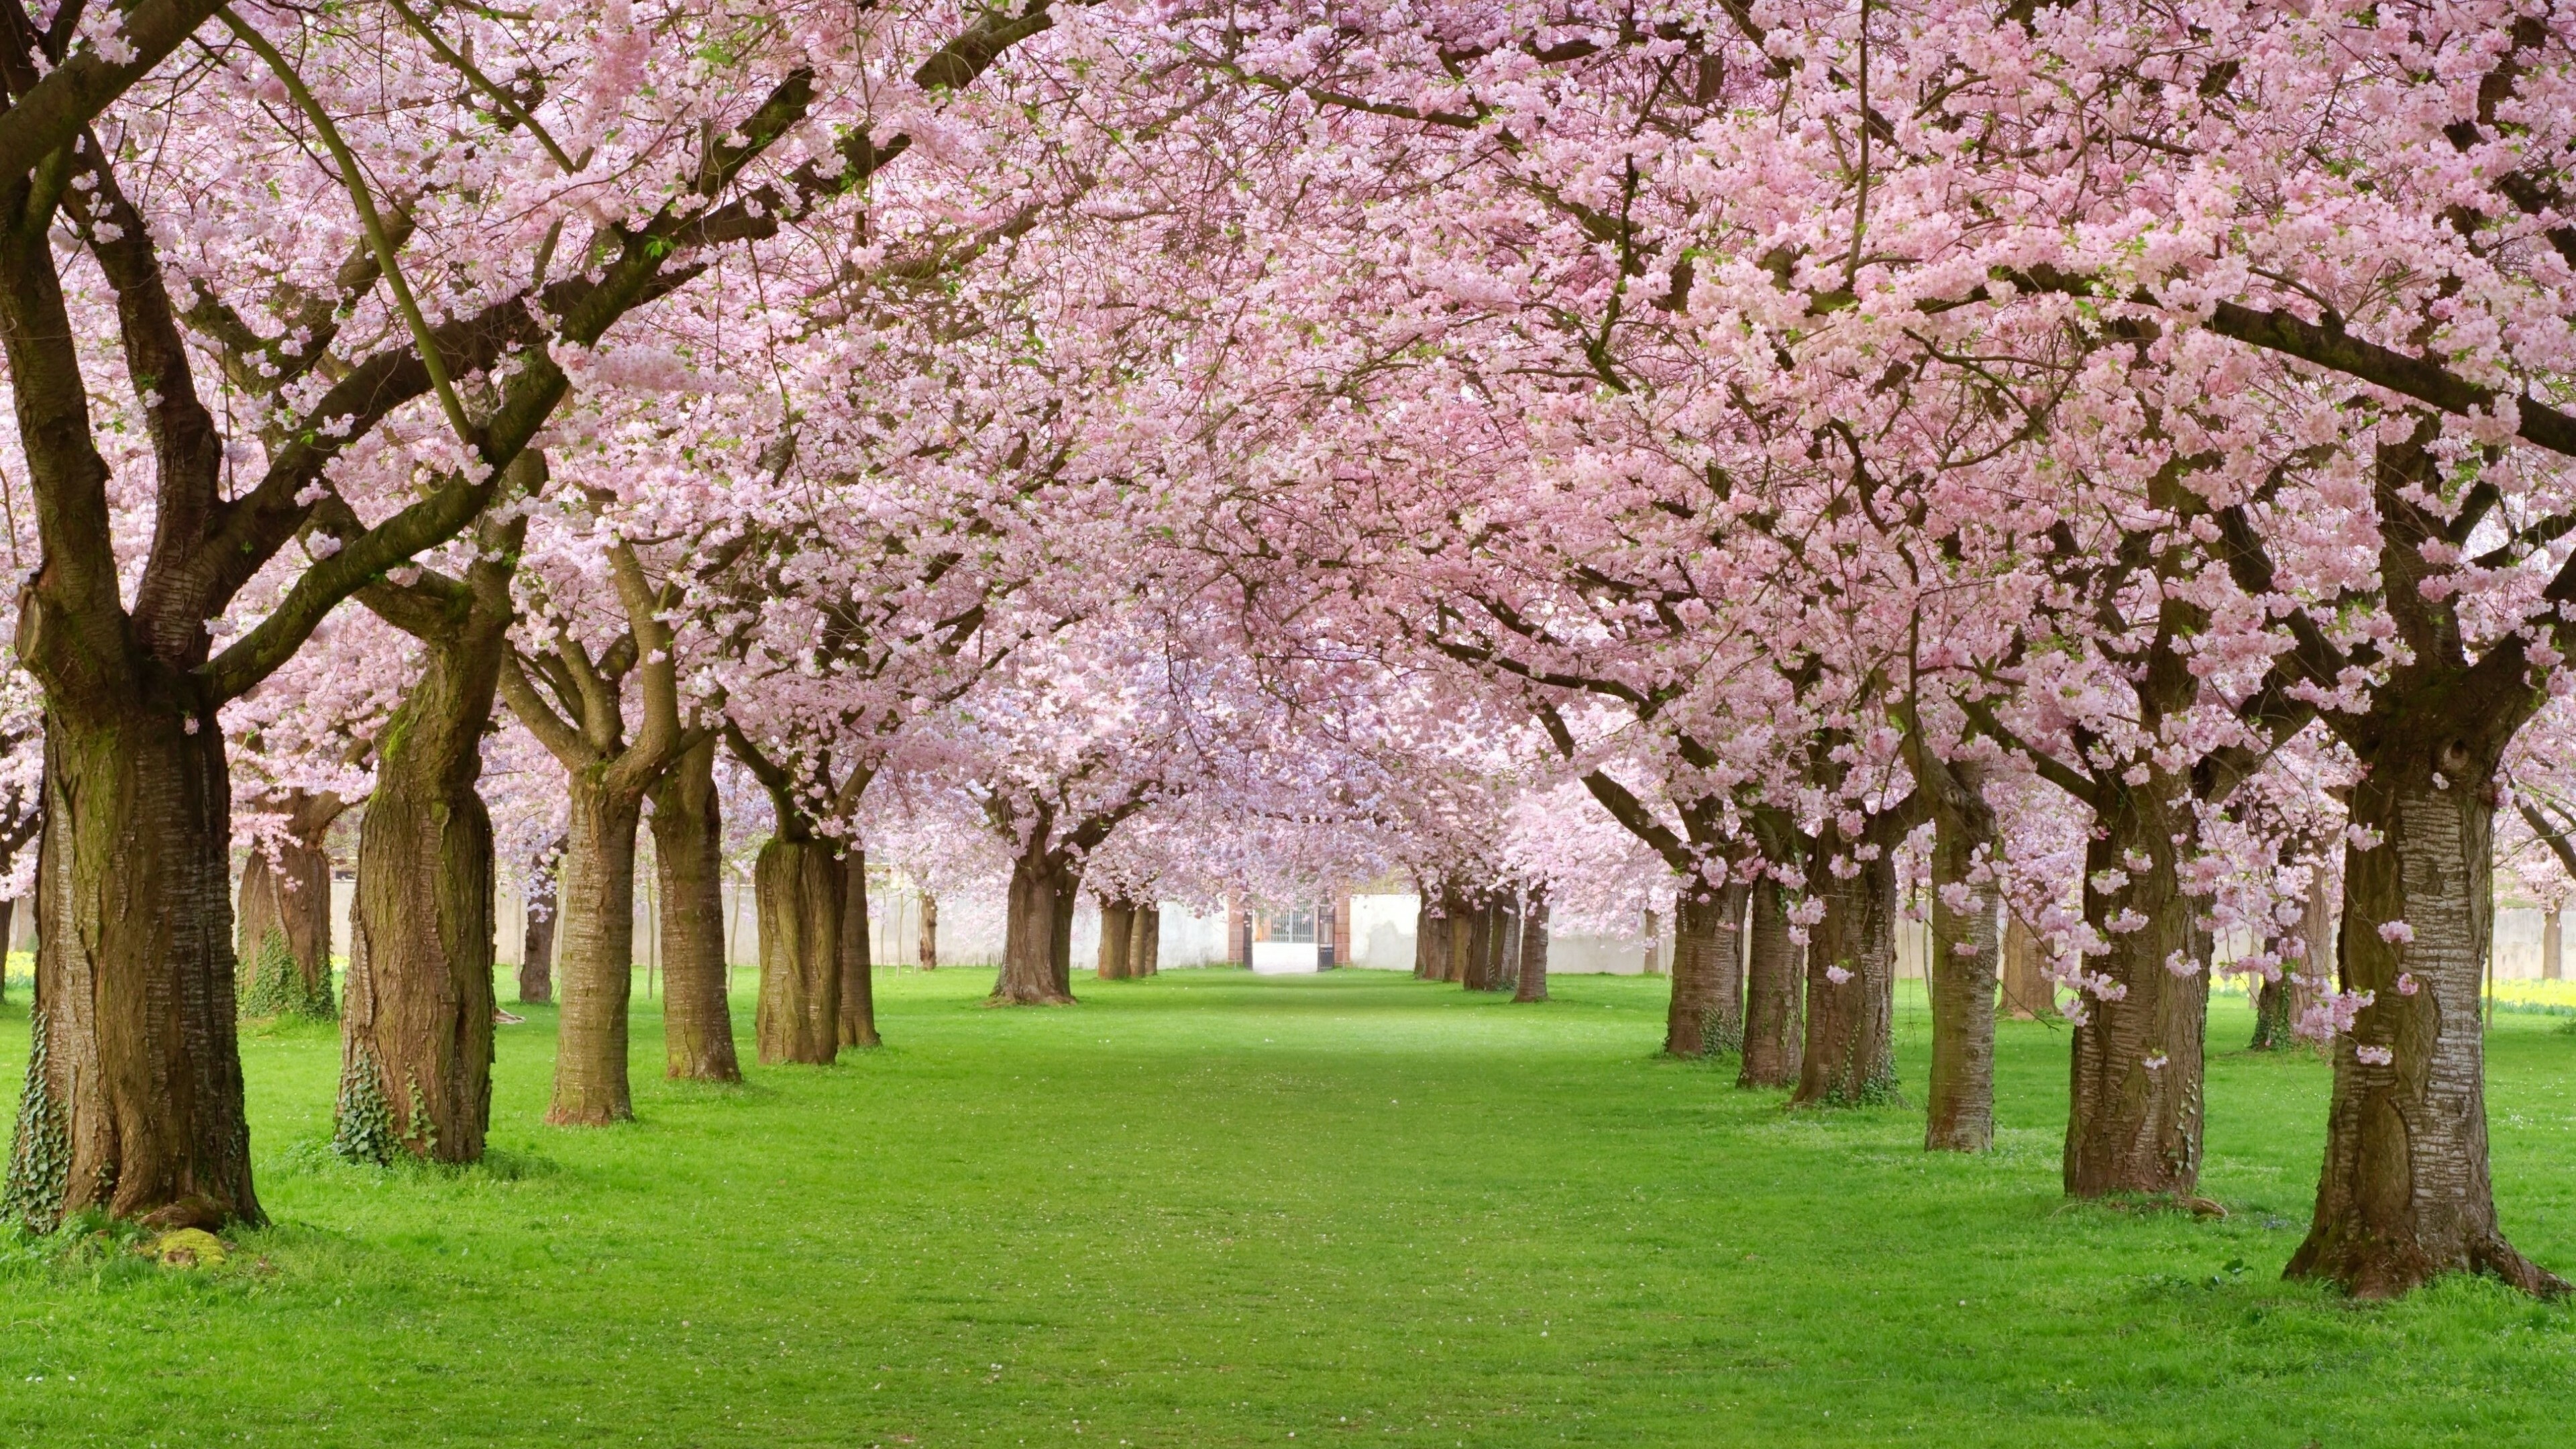 Nature's tranquility, Pink blossom trees, Vibrant park setting, 4K bliss, 3840x2160 4K Desktop